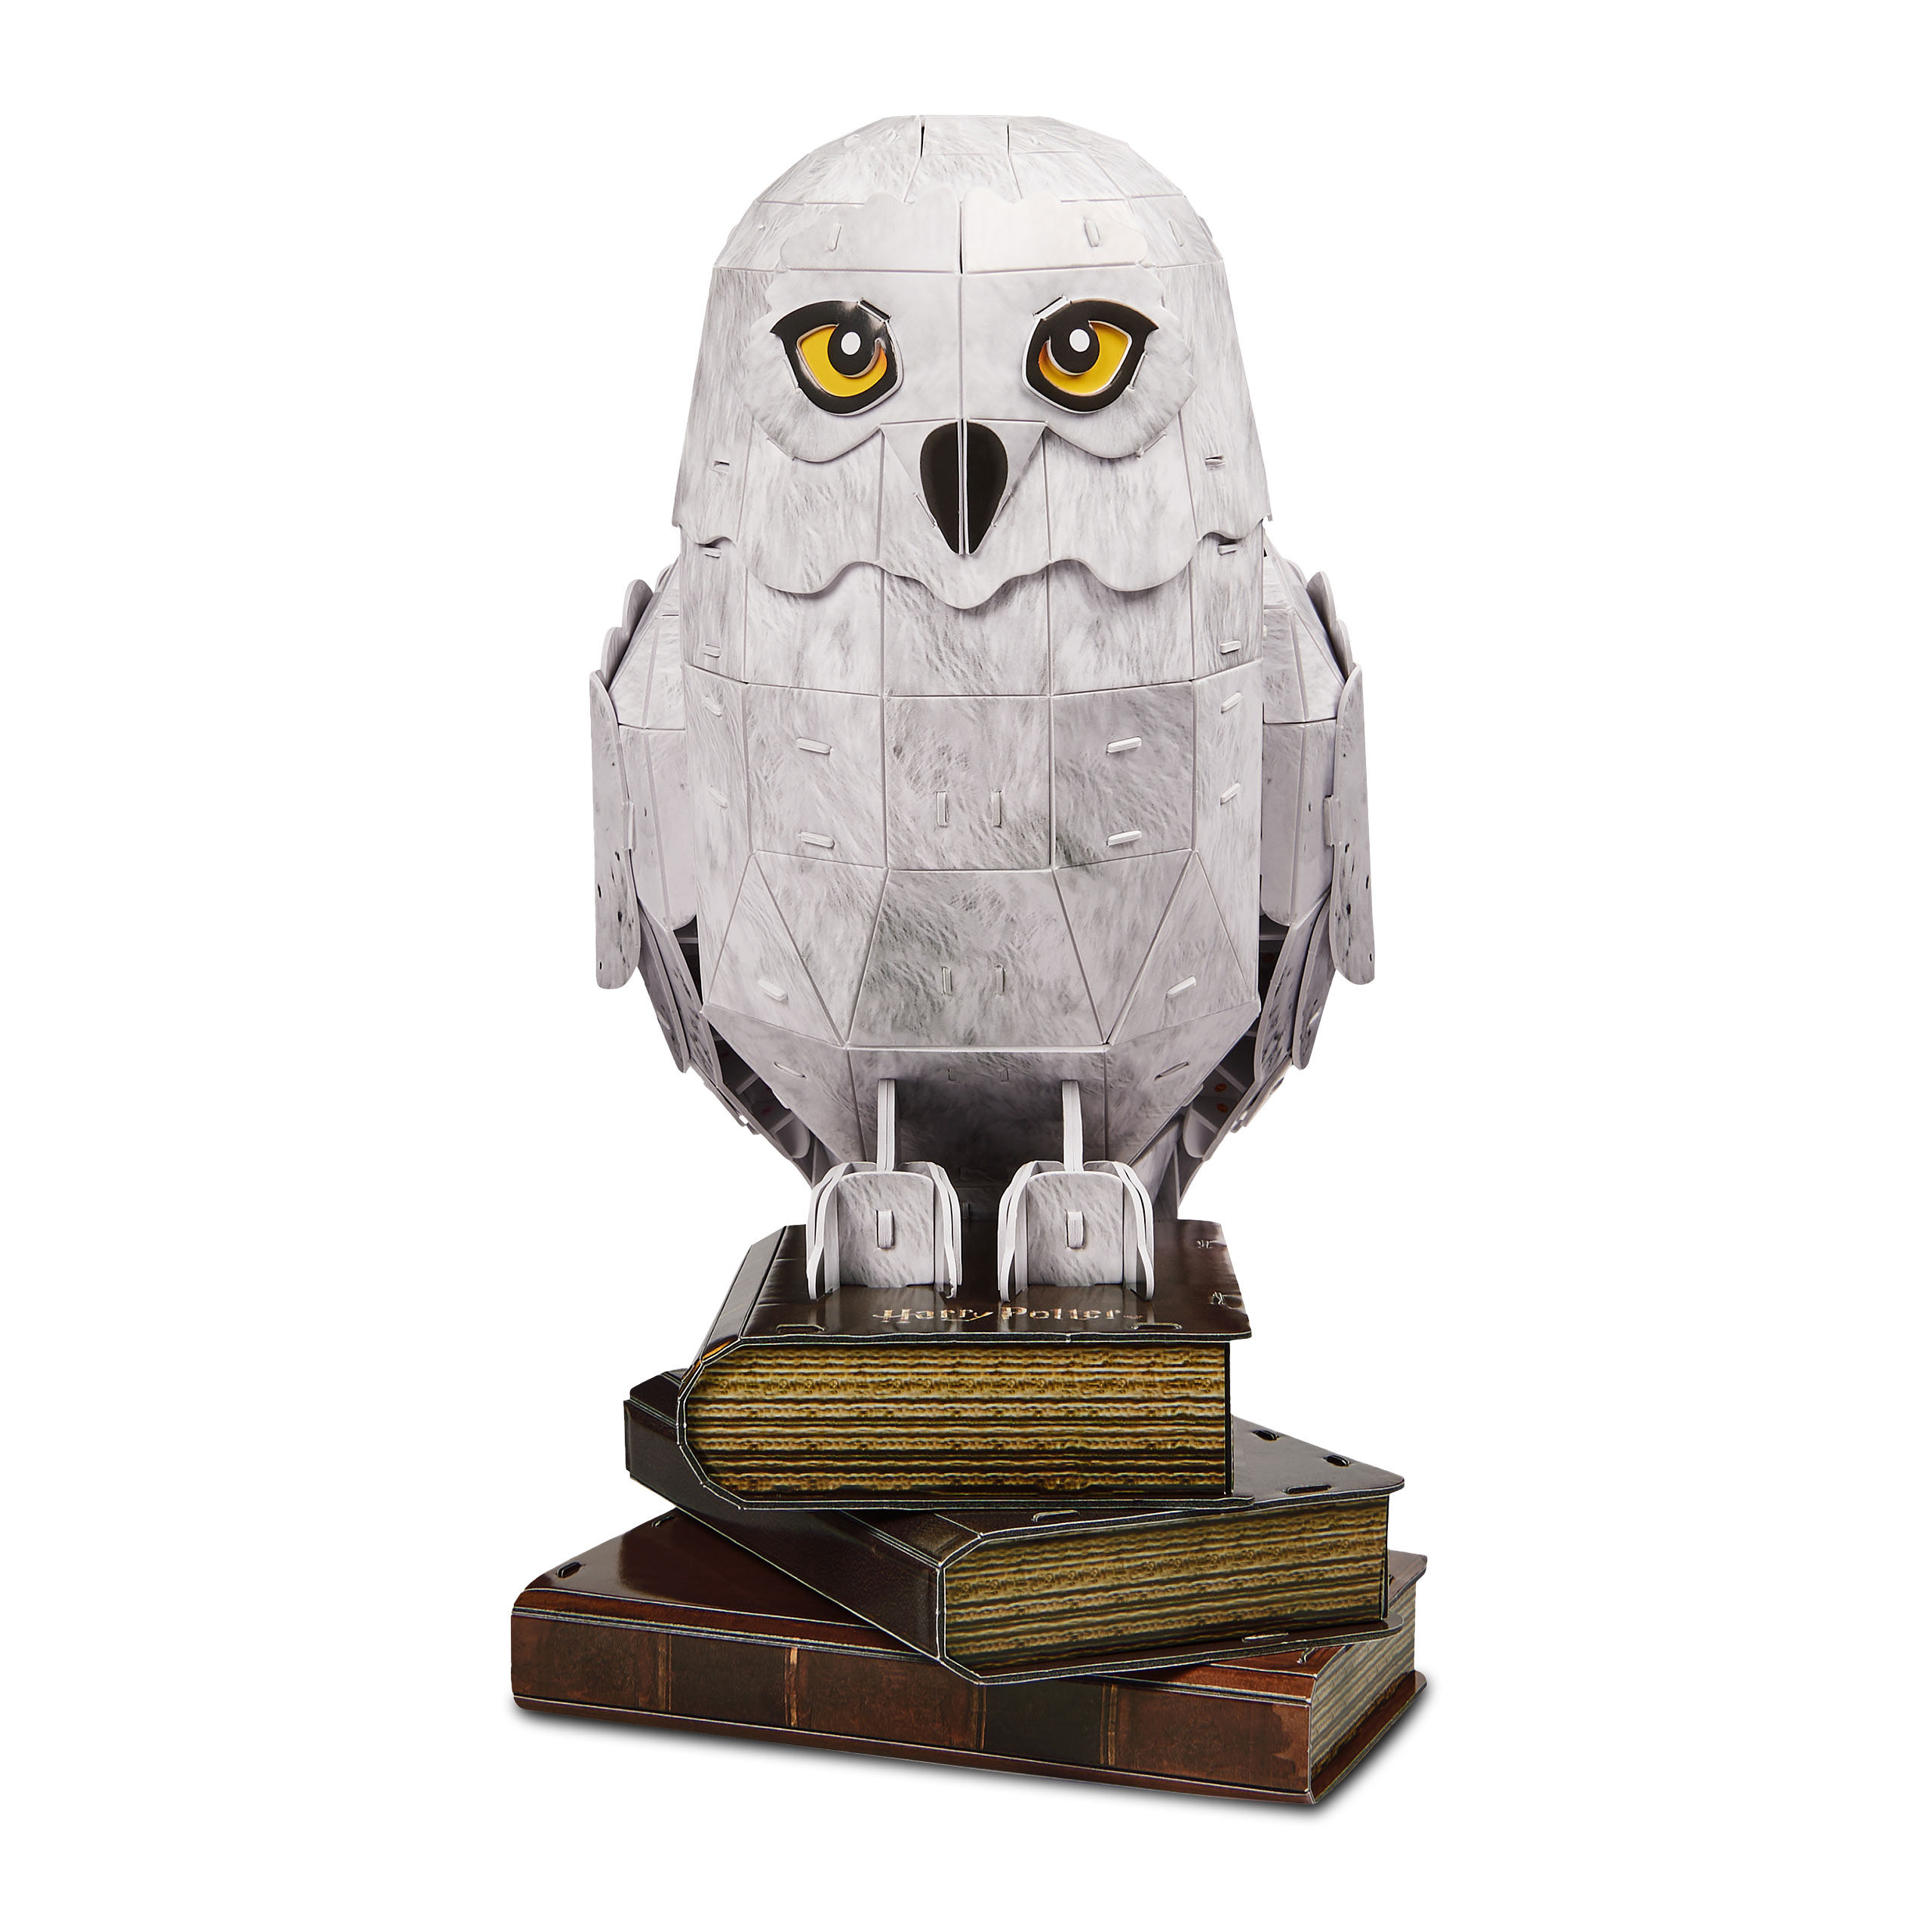 Hedwig 4D Build Modell Bausatz - Harry Potter